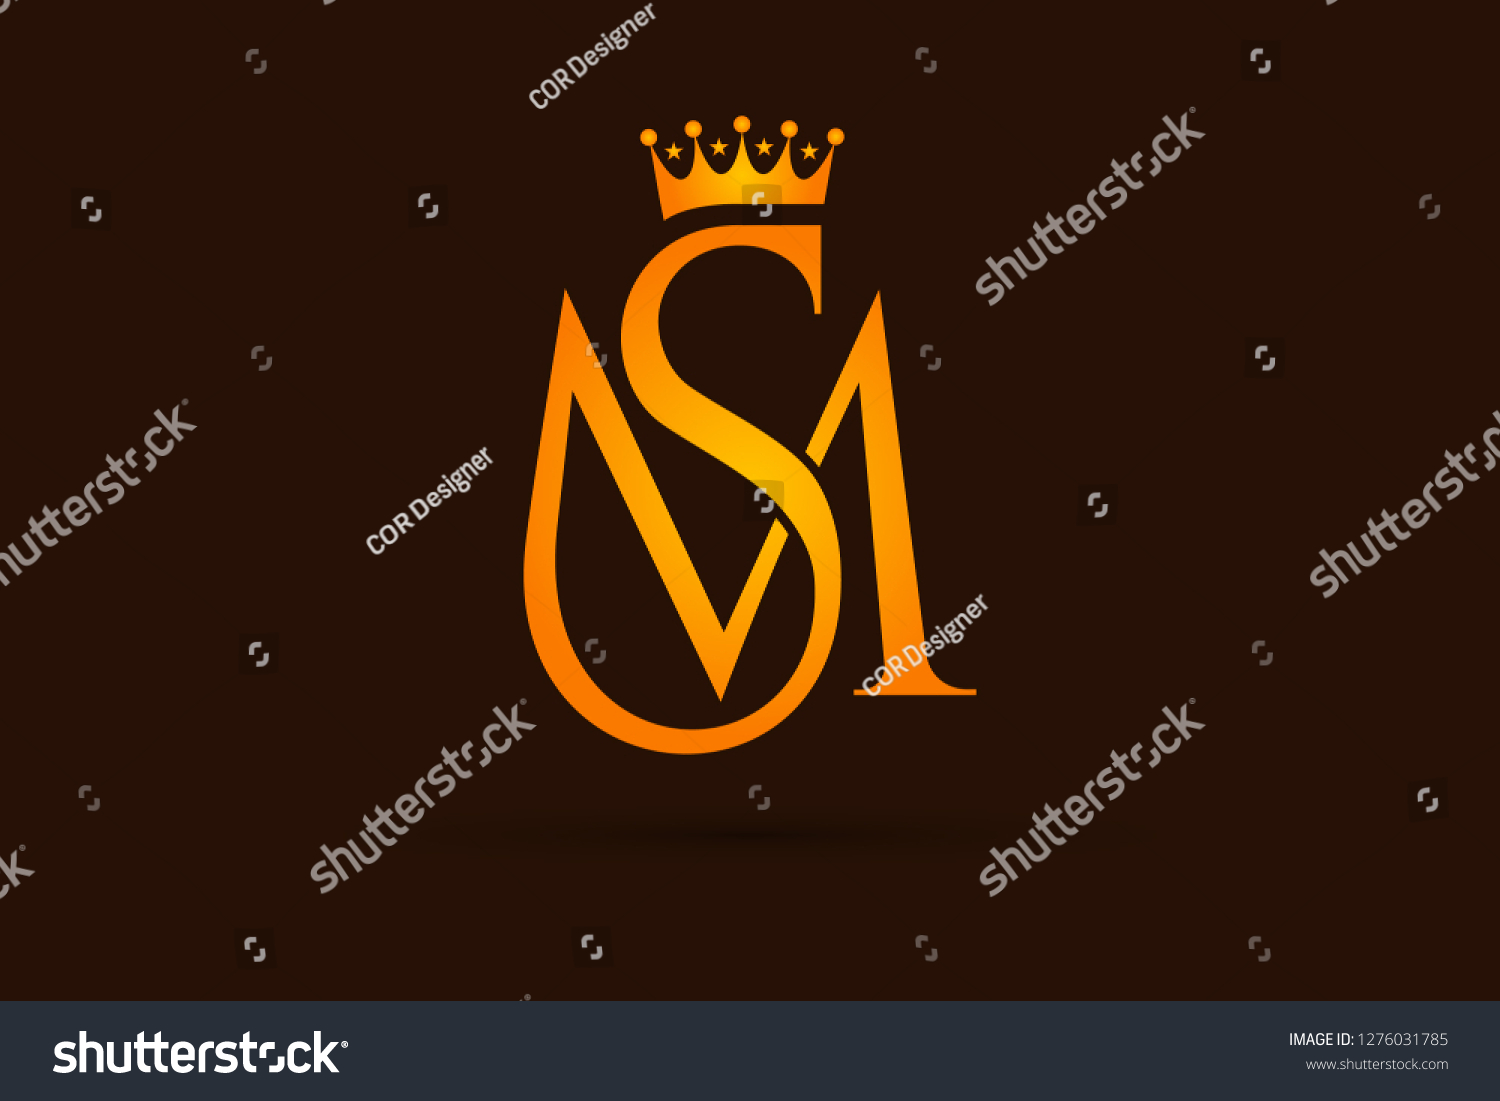 Luxurious Golden Crown Sm Logo Design Image Vectorielle De Stock Libre De Droits